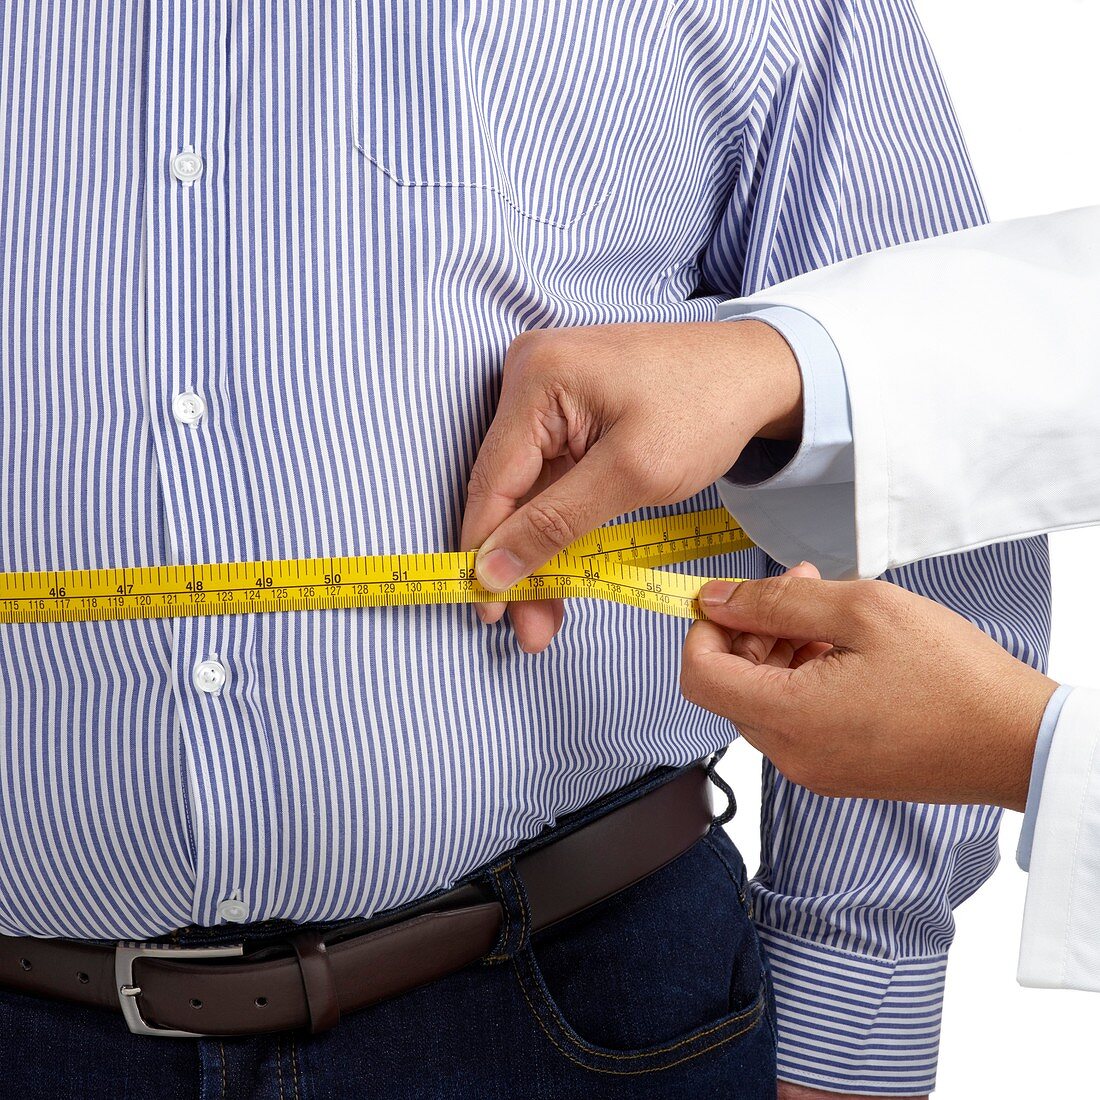 Doctor measuring man's waist